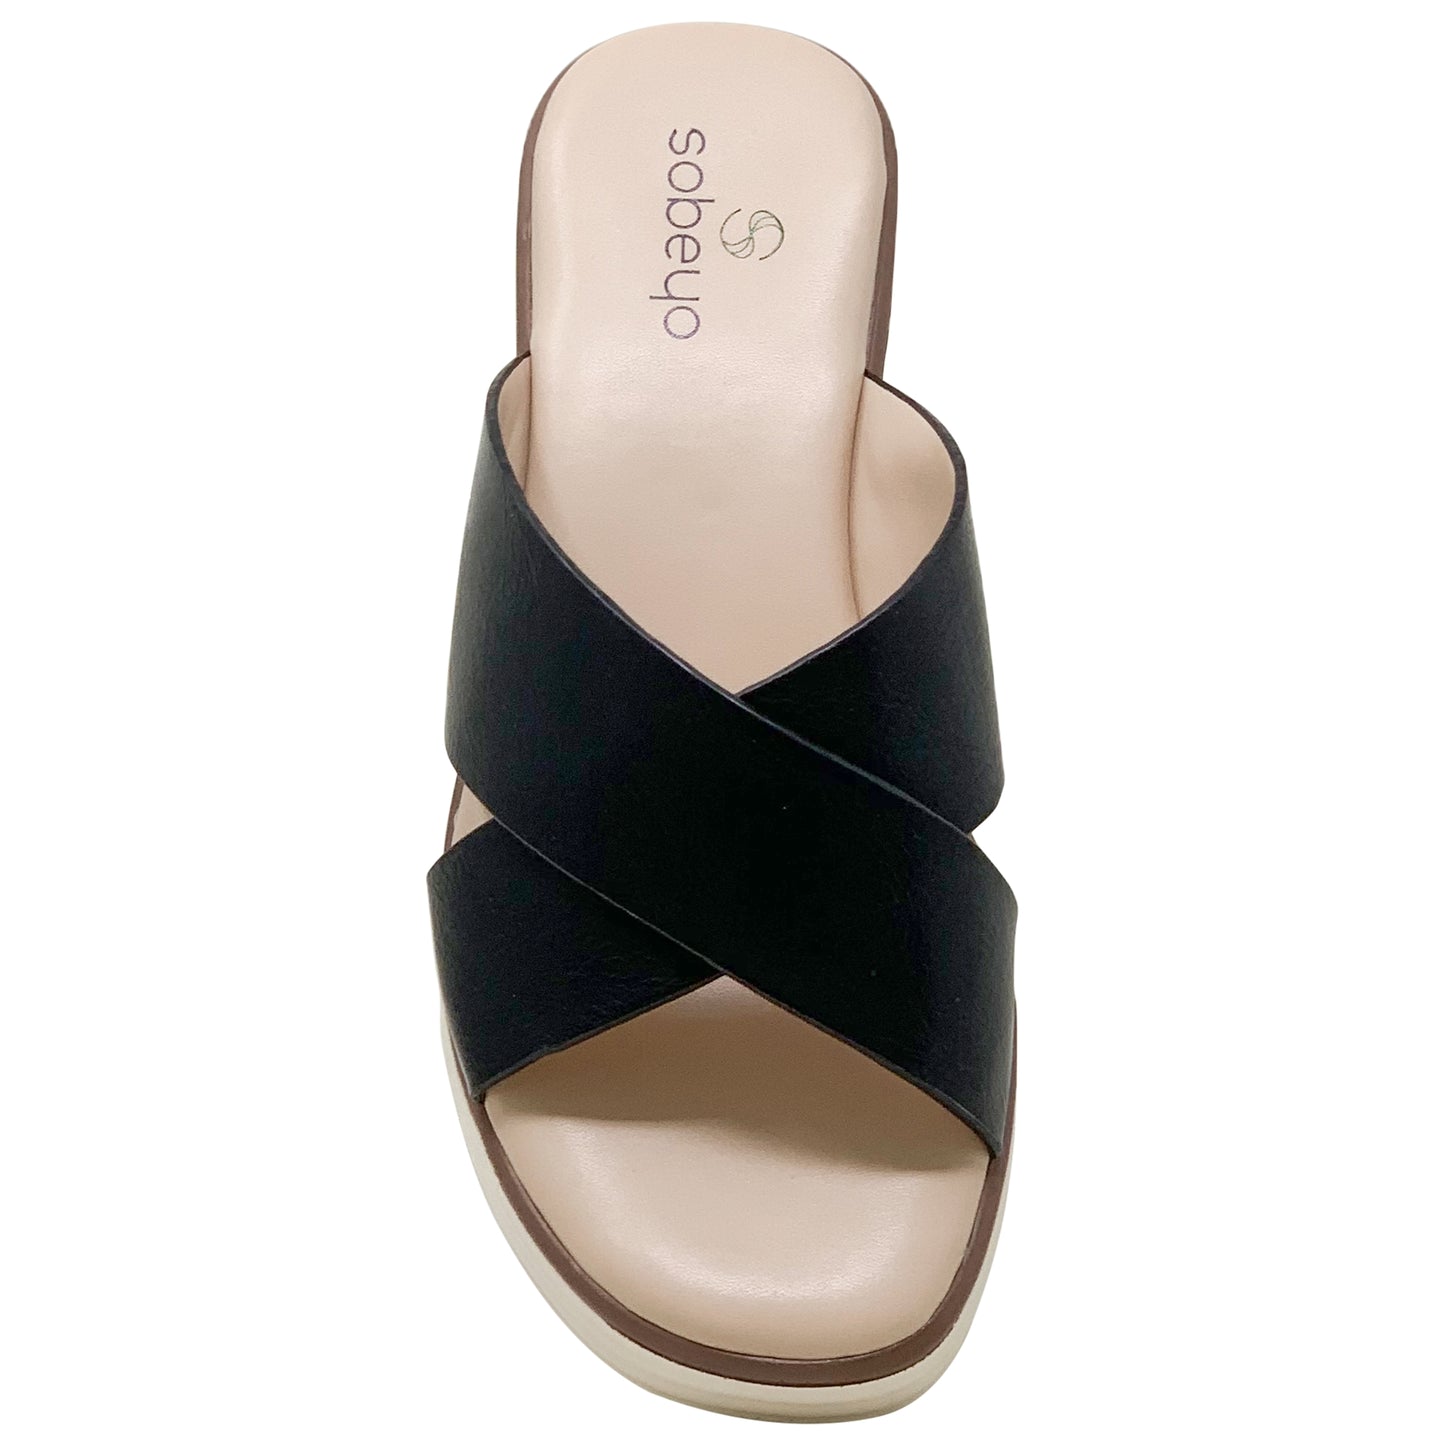 SOBEYO Criss Cross Platform Sandals Cushioned  Striped Sole Black